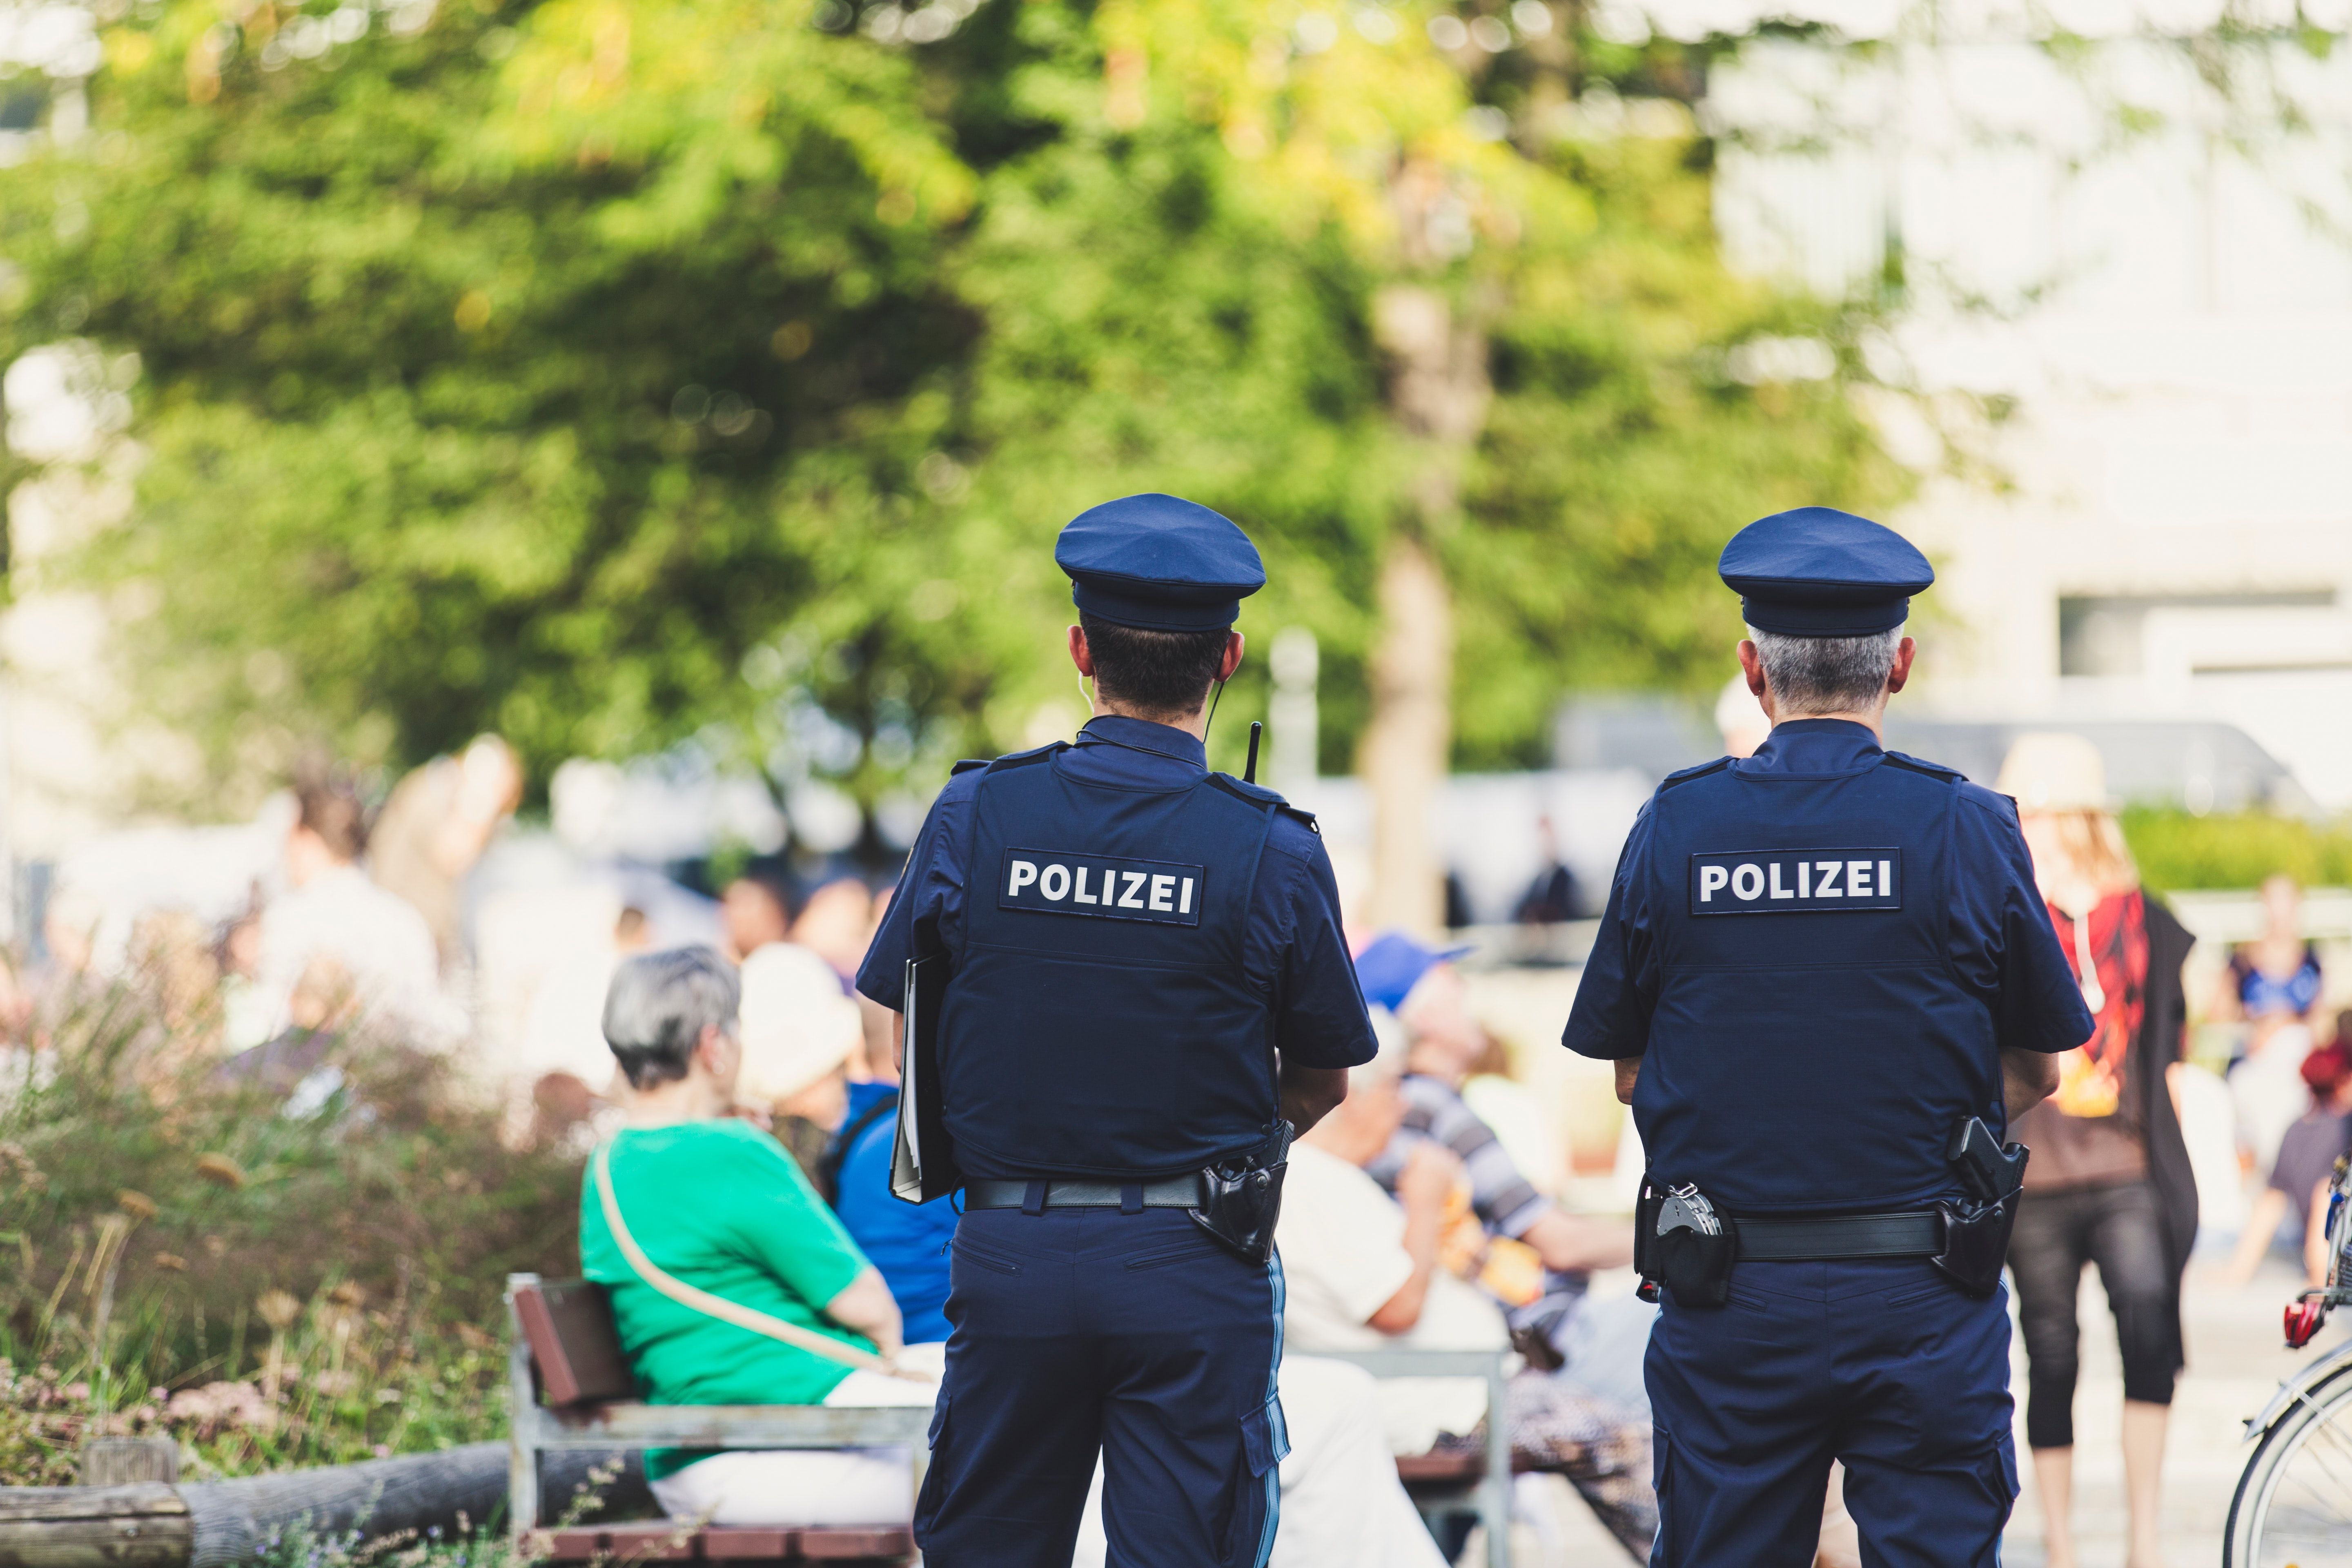 police patrolling in the german city of erlangen